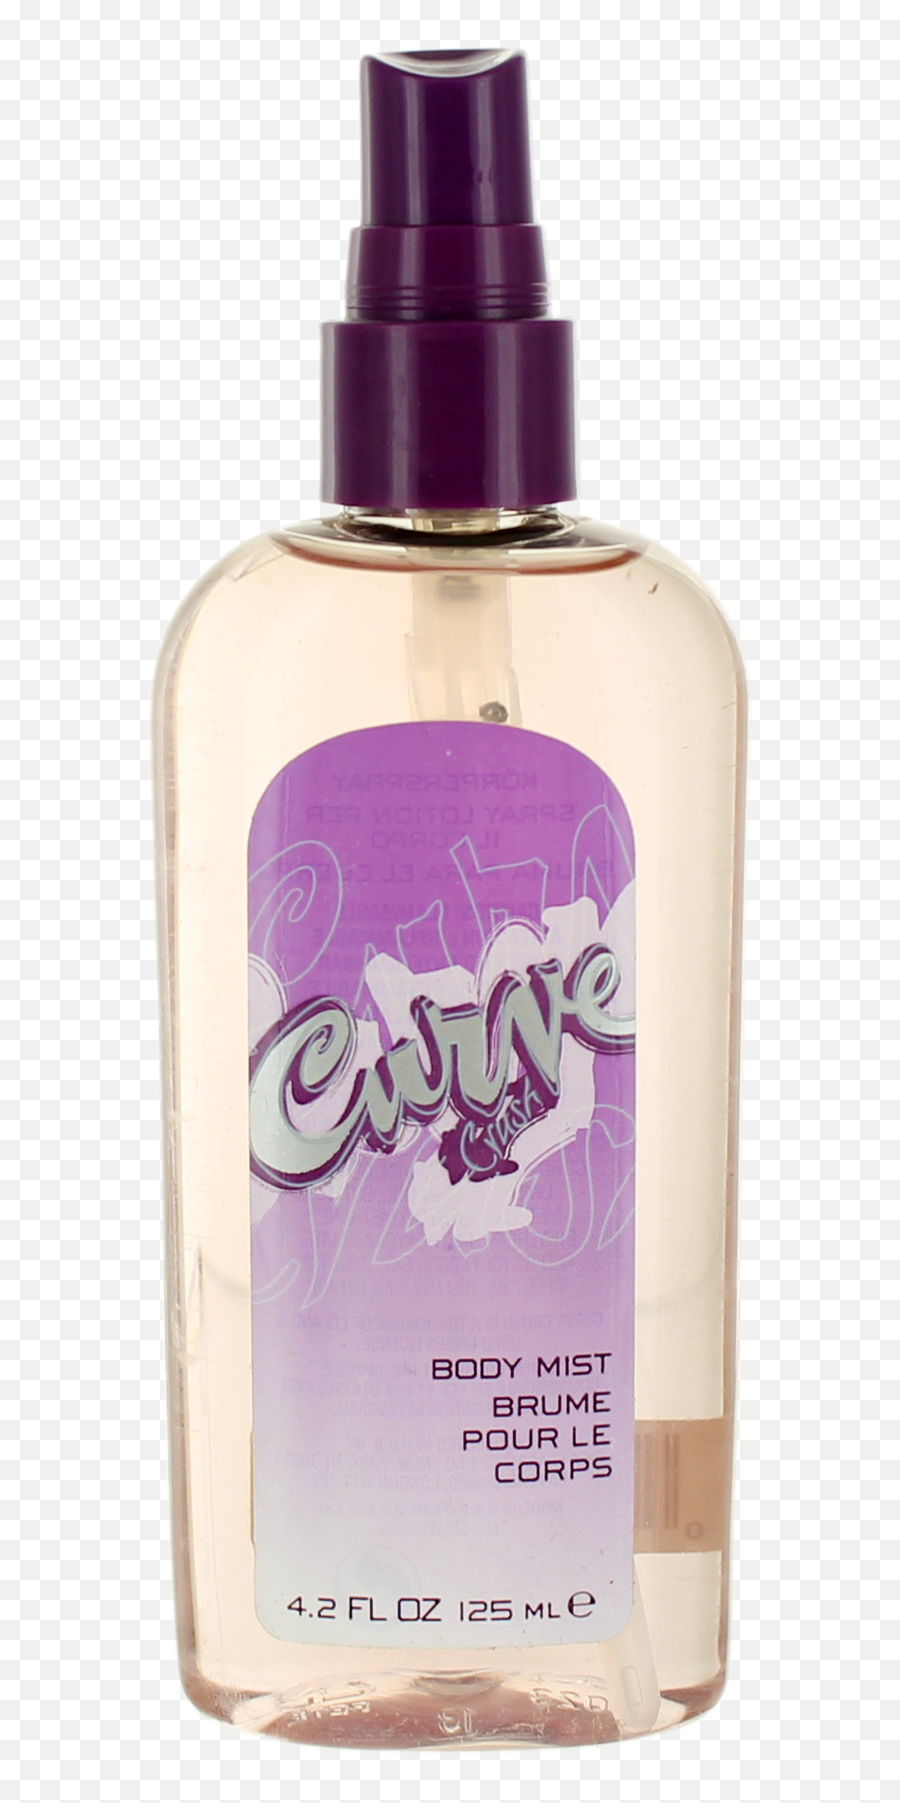 Details About Curve Crush By Liz Claiborne For Women Body Mist Perfume Spray 42oz No Cap New Png Purple